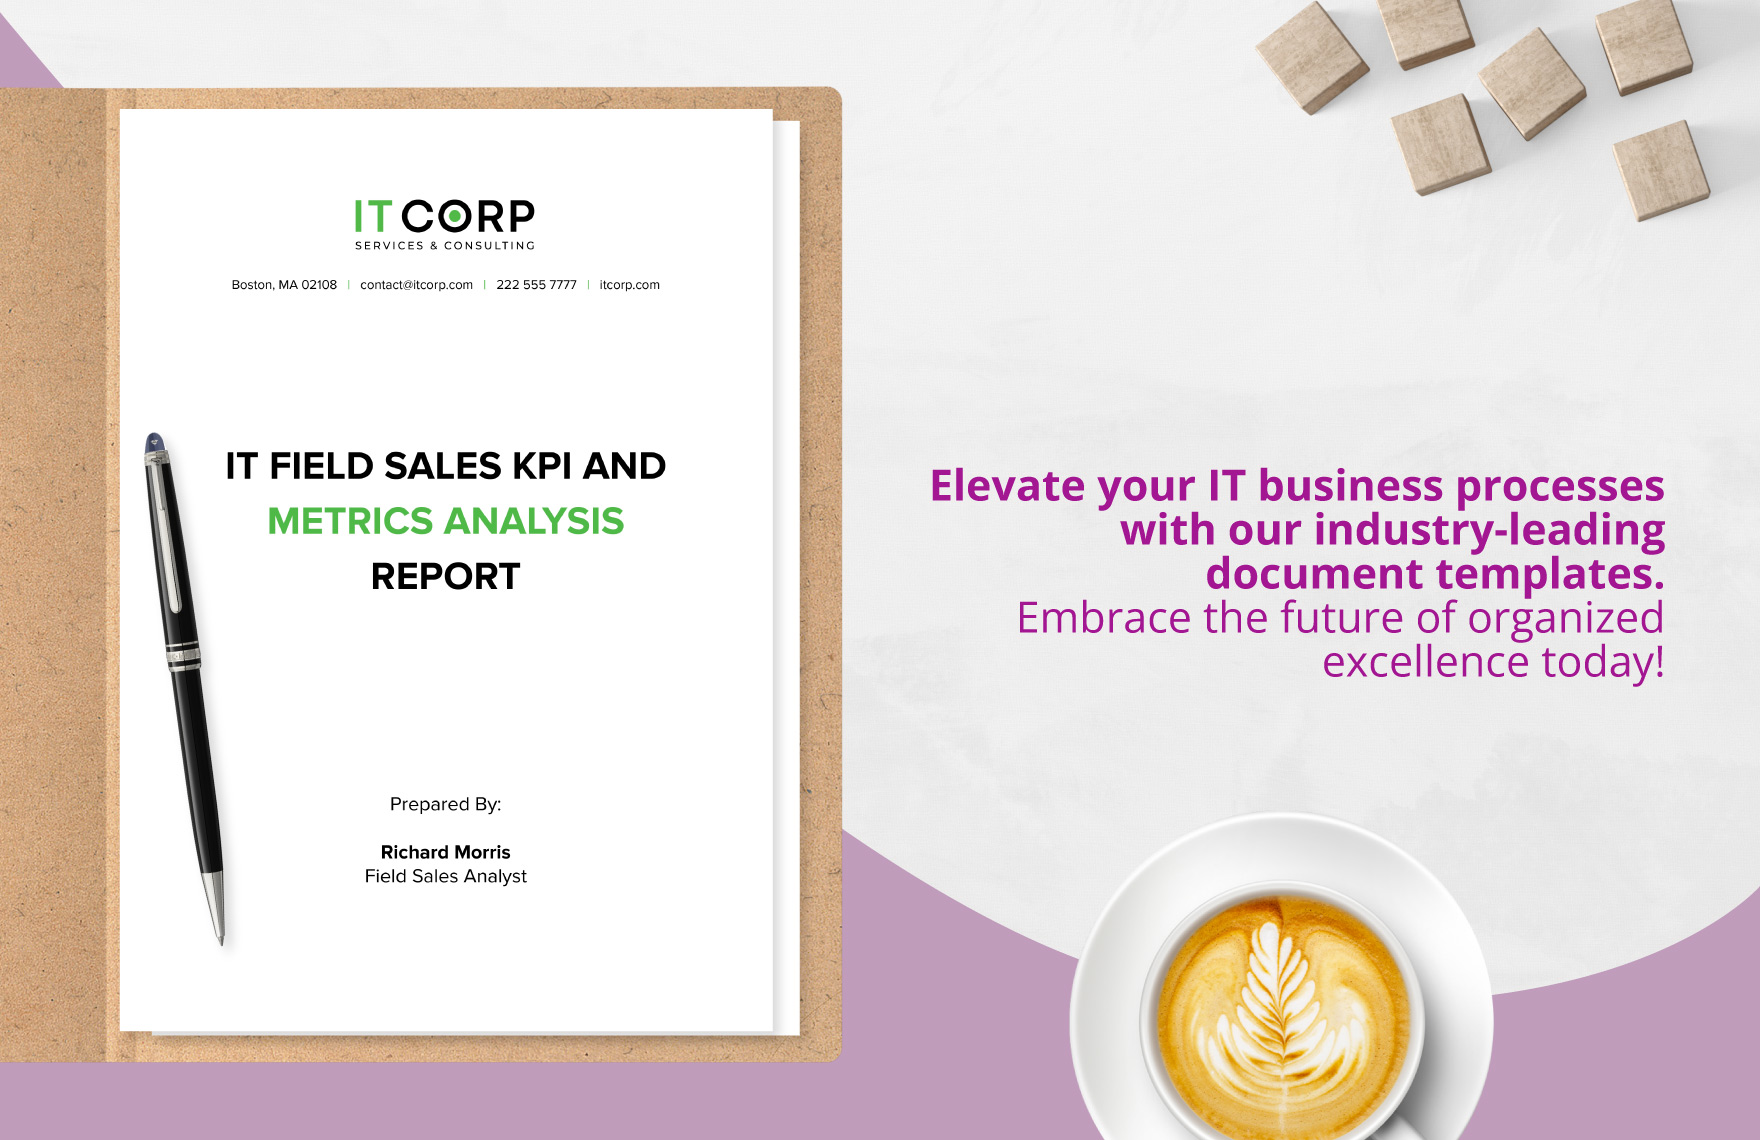 IT Field Sales KPI and Metrics Analysis Report Template